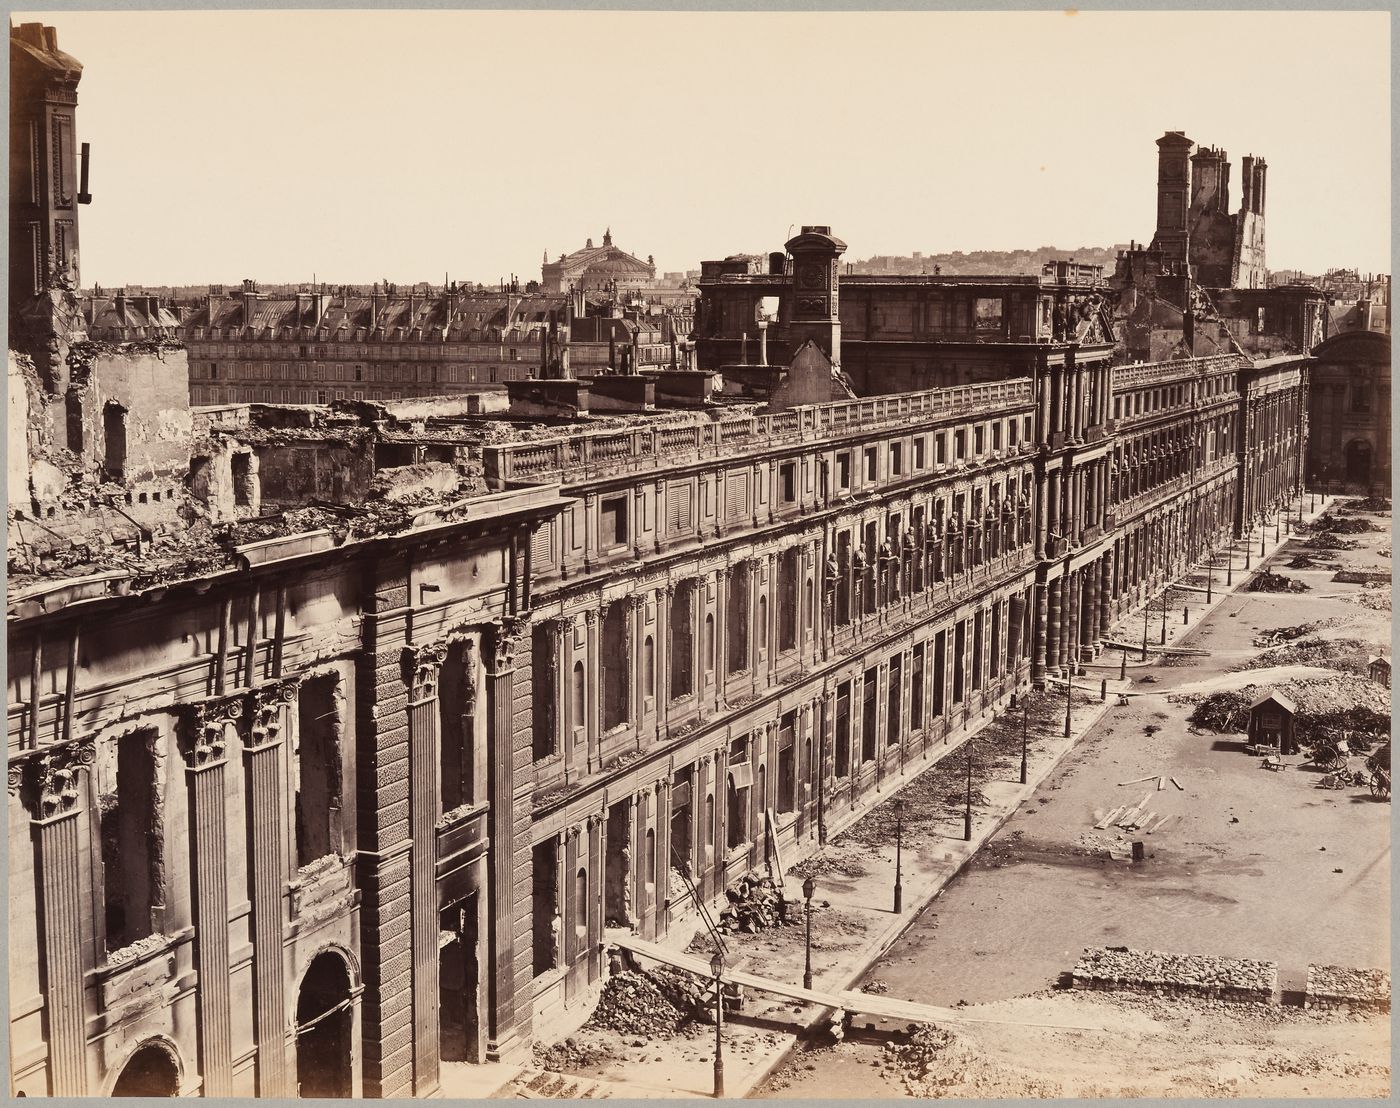 View of the Tuileries exterior facade after the Paris Commune, Paris, France